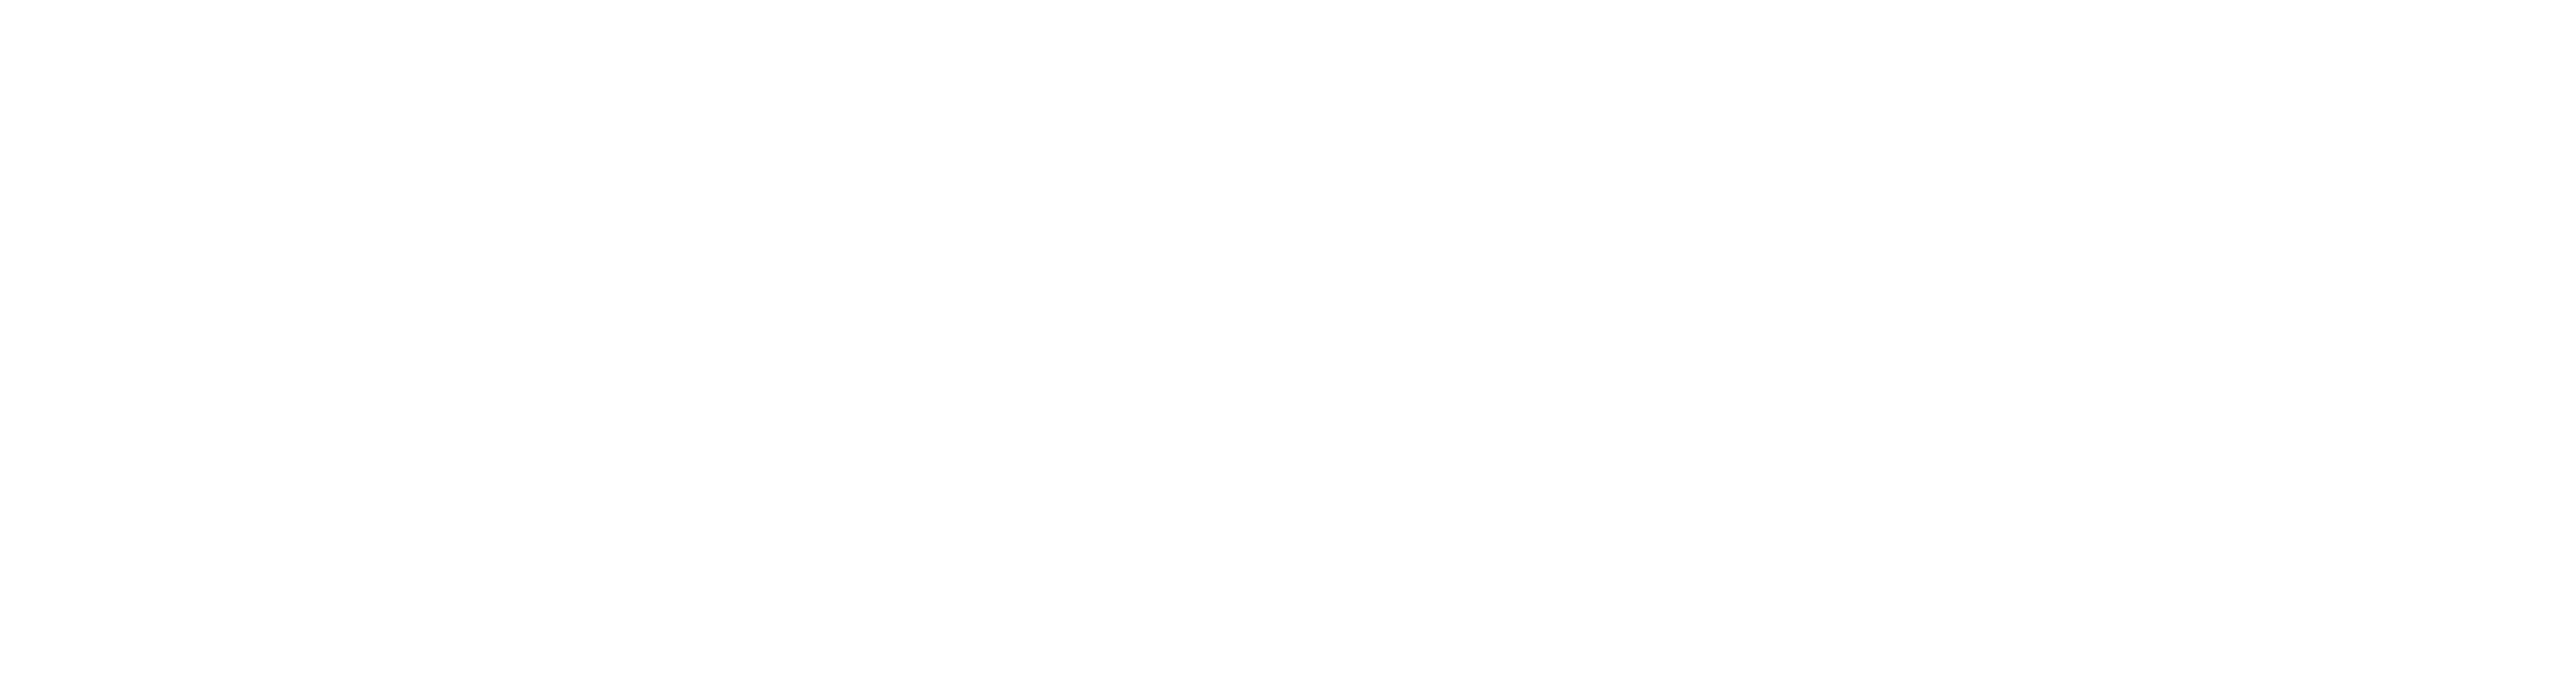 LTL-logo-02-white